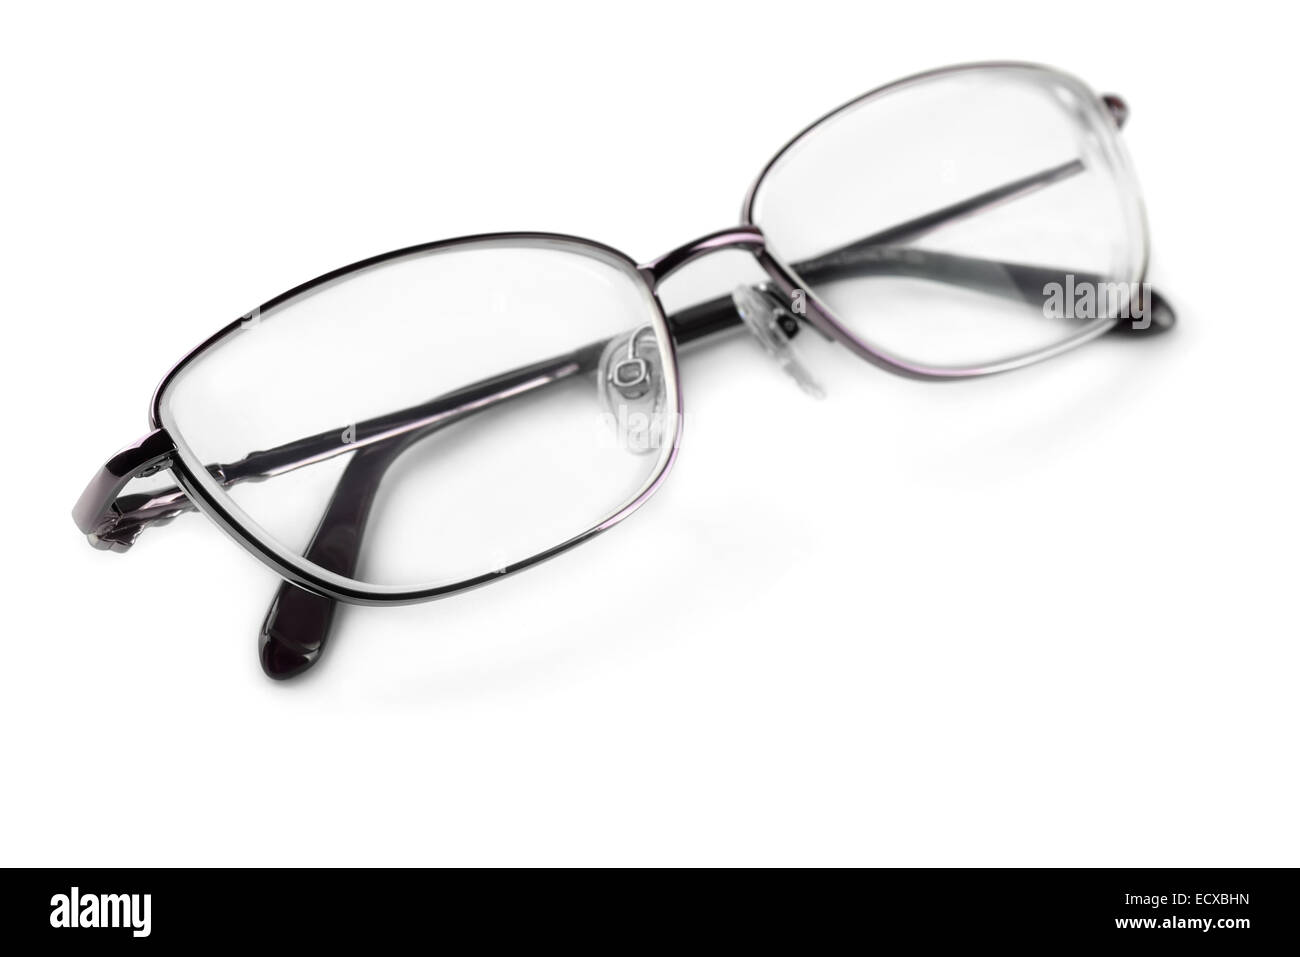 Pair of eyeglasses isolated on white Stock Photo